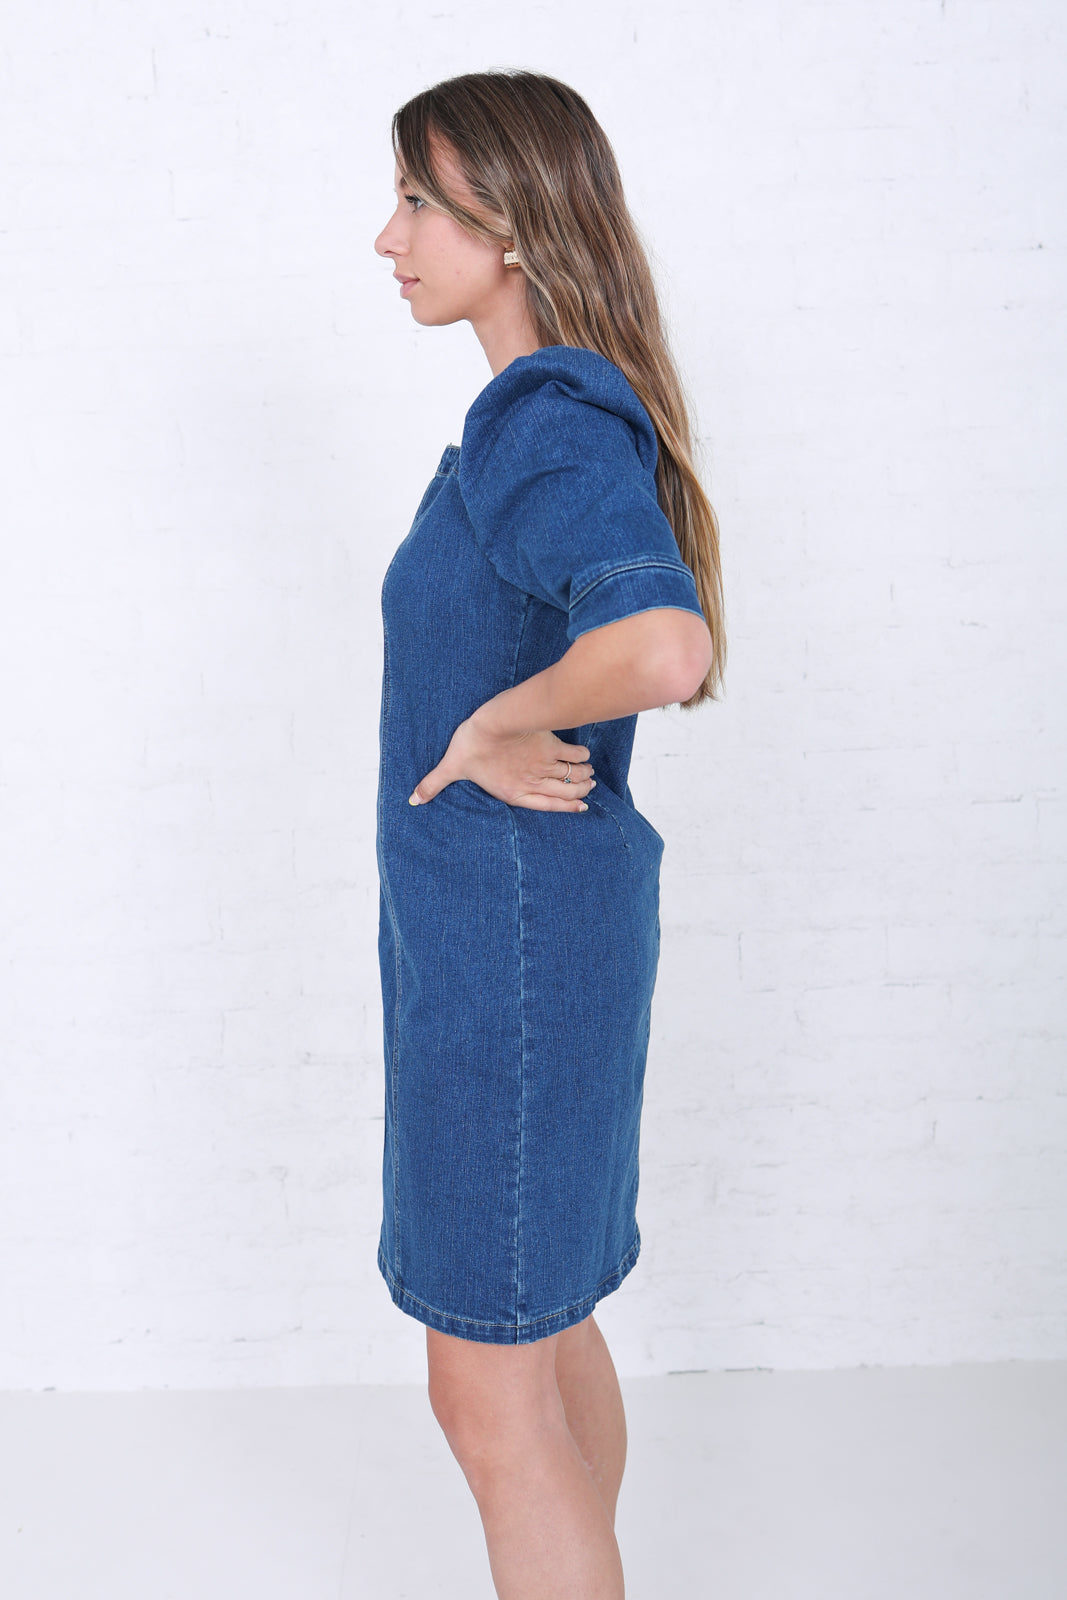 MO&Co. Women's Back Slit Denim Dress with Straps